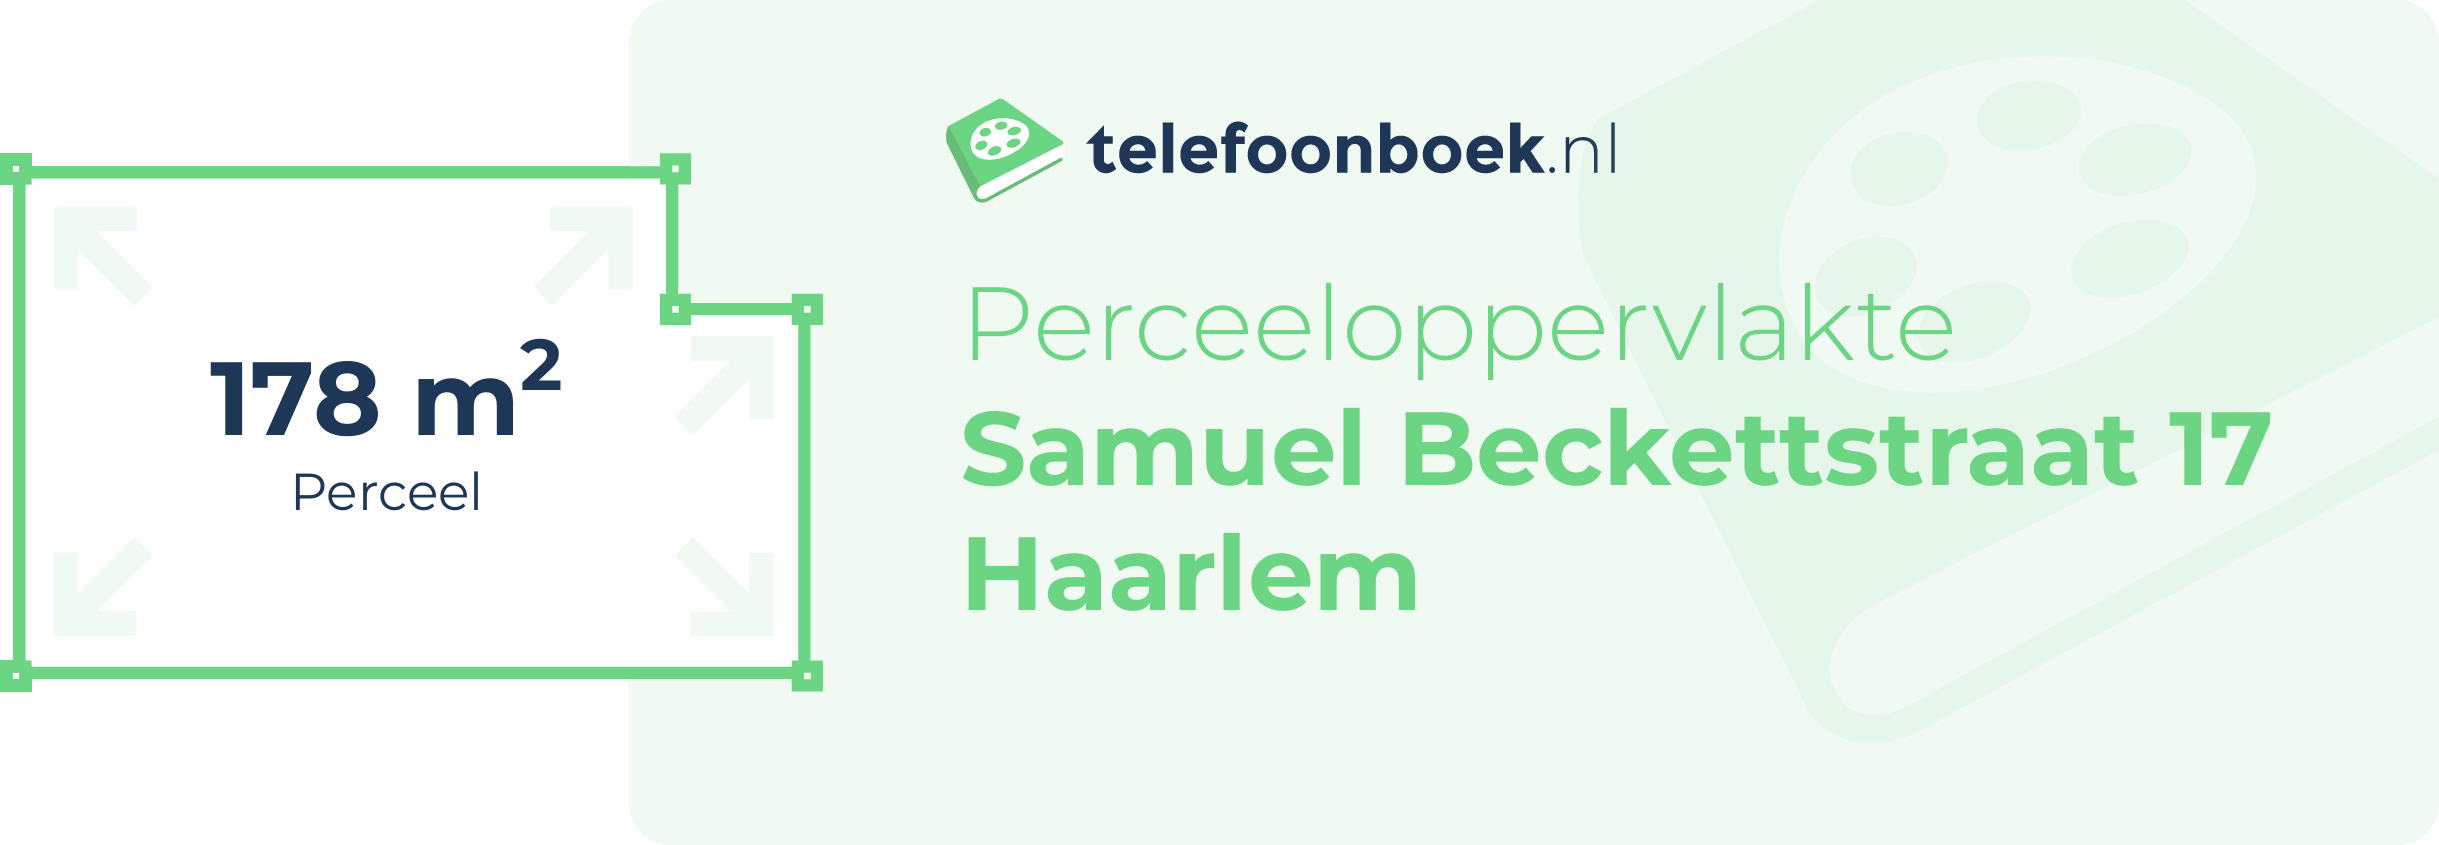 Perceeloppervlakte Samuel Beckettstraat 17 Haarlem